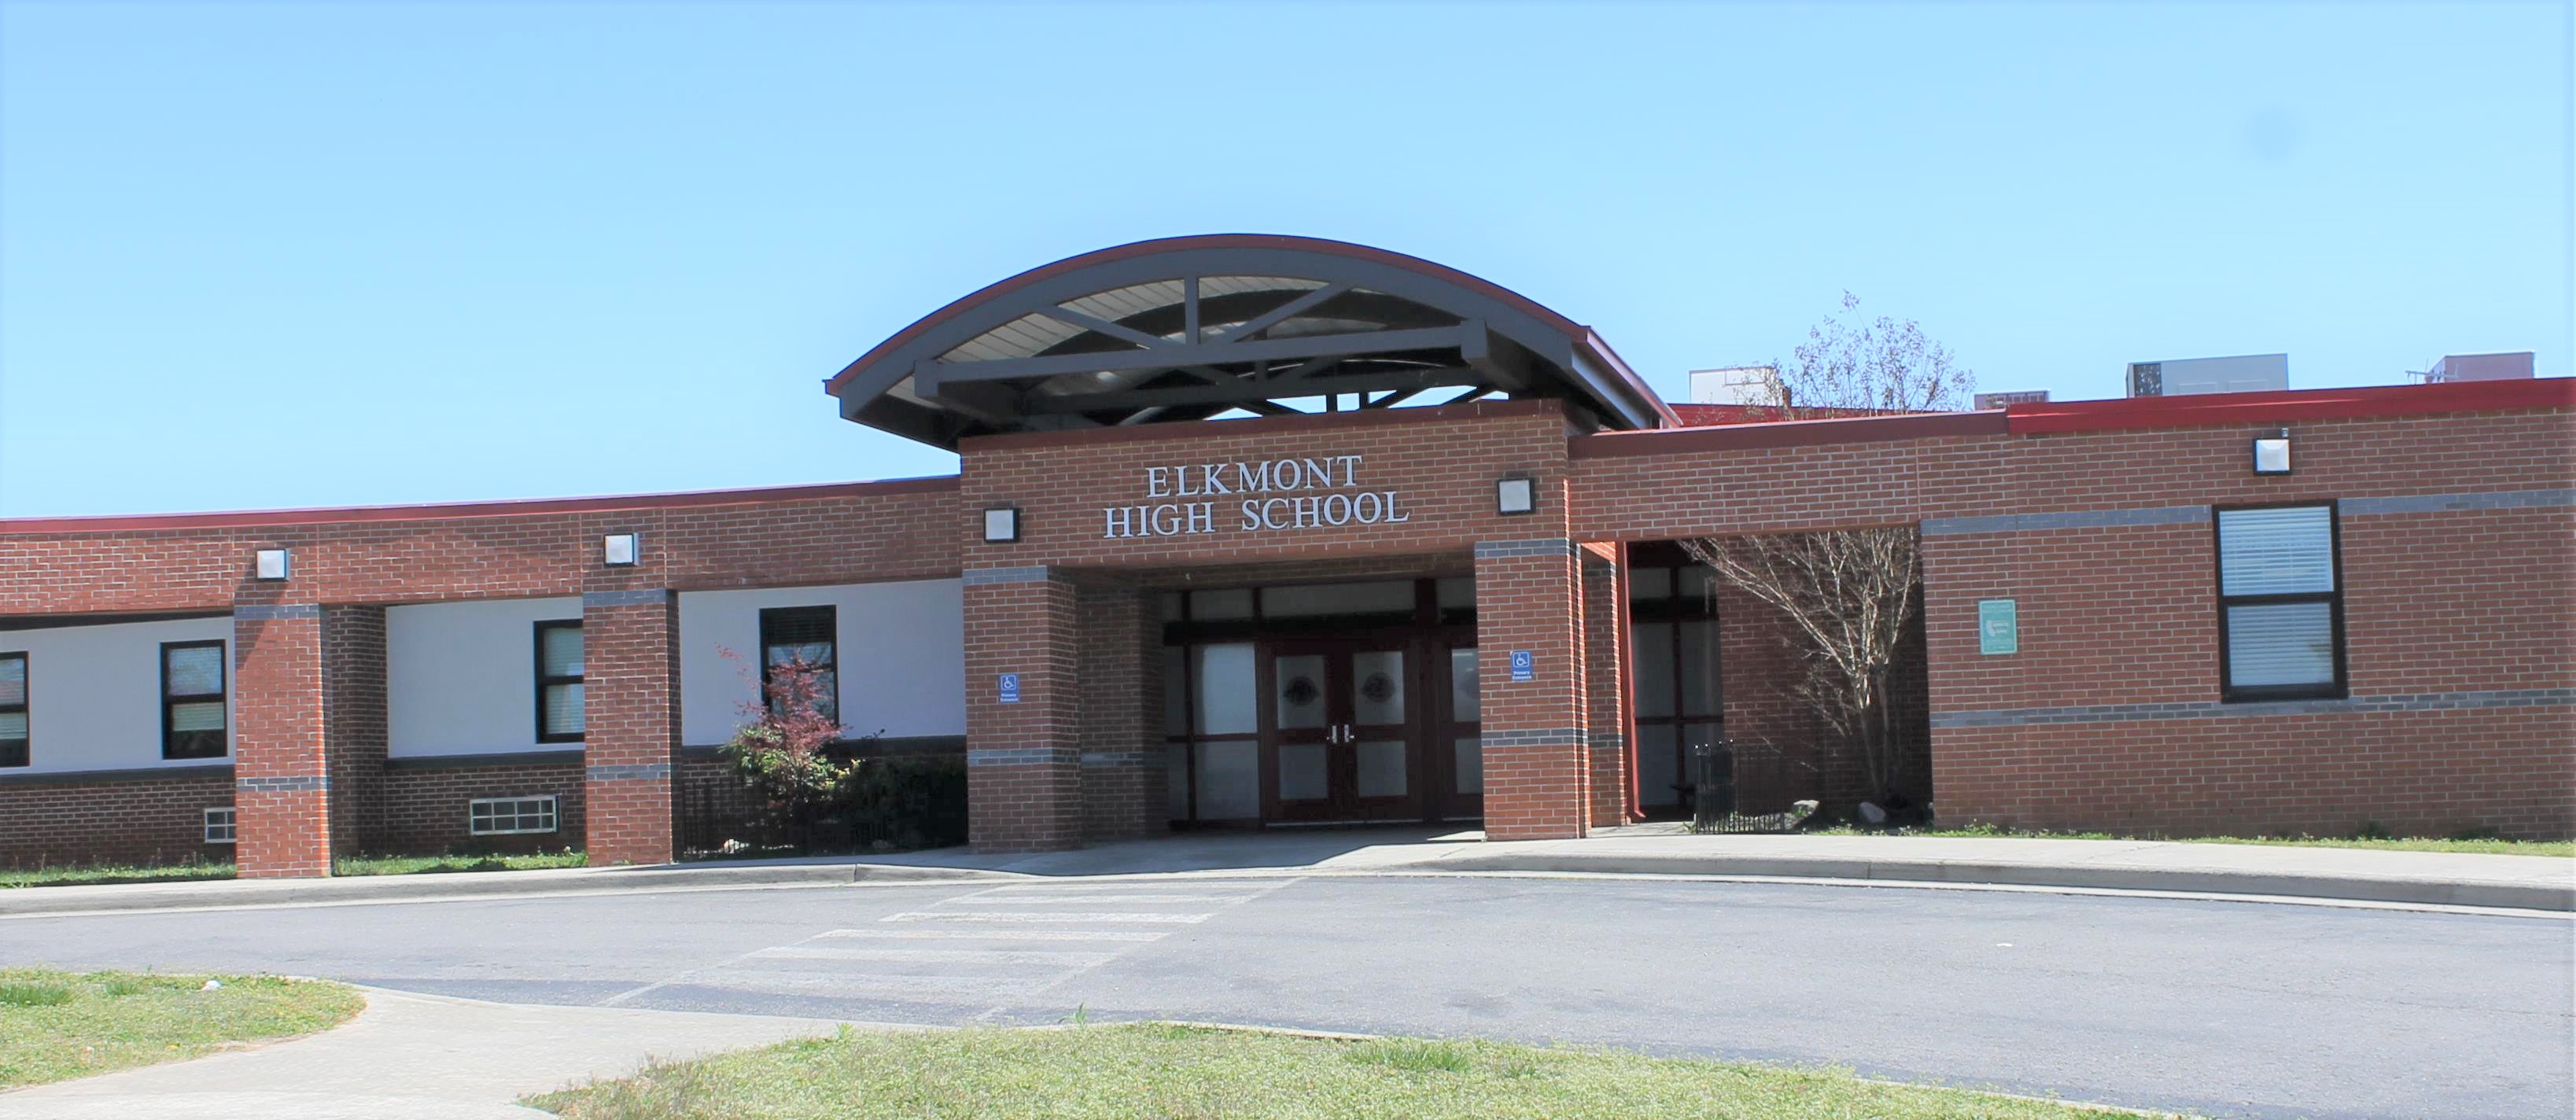 elkmont high school photo of front of building